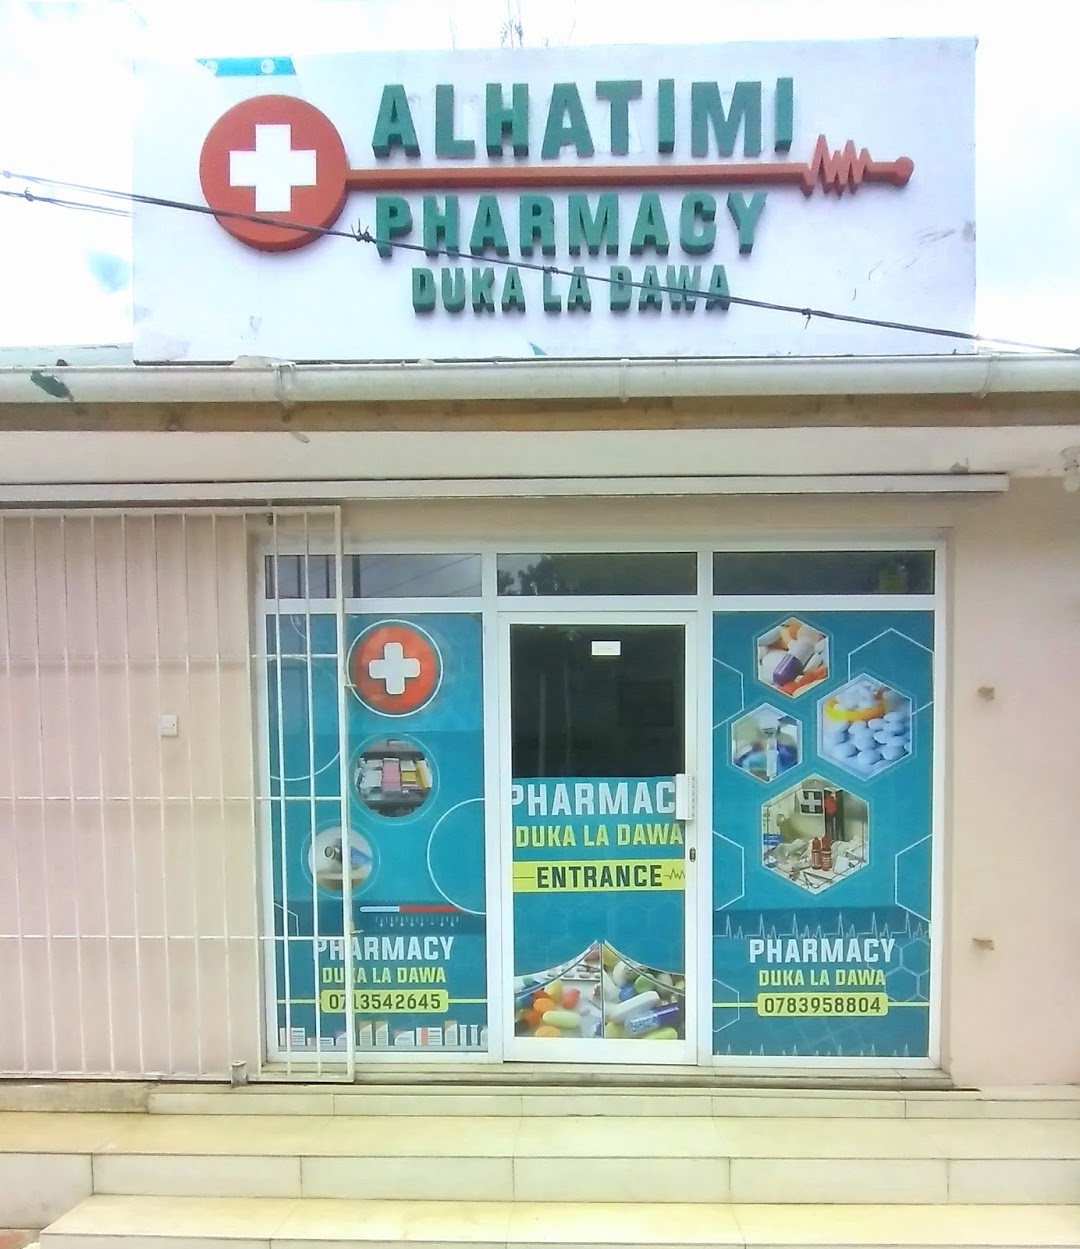 Al-Hatimi pharmacy